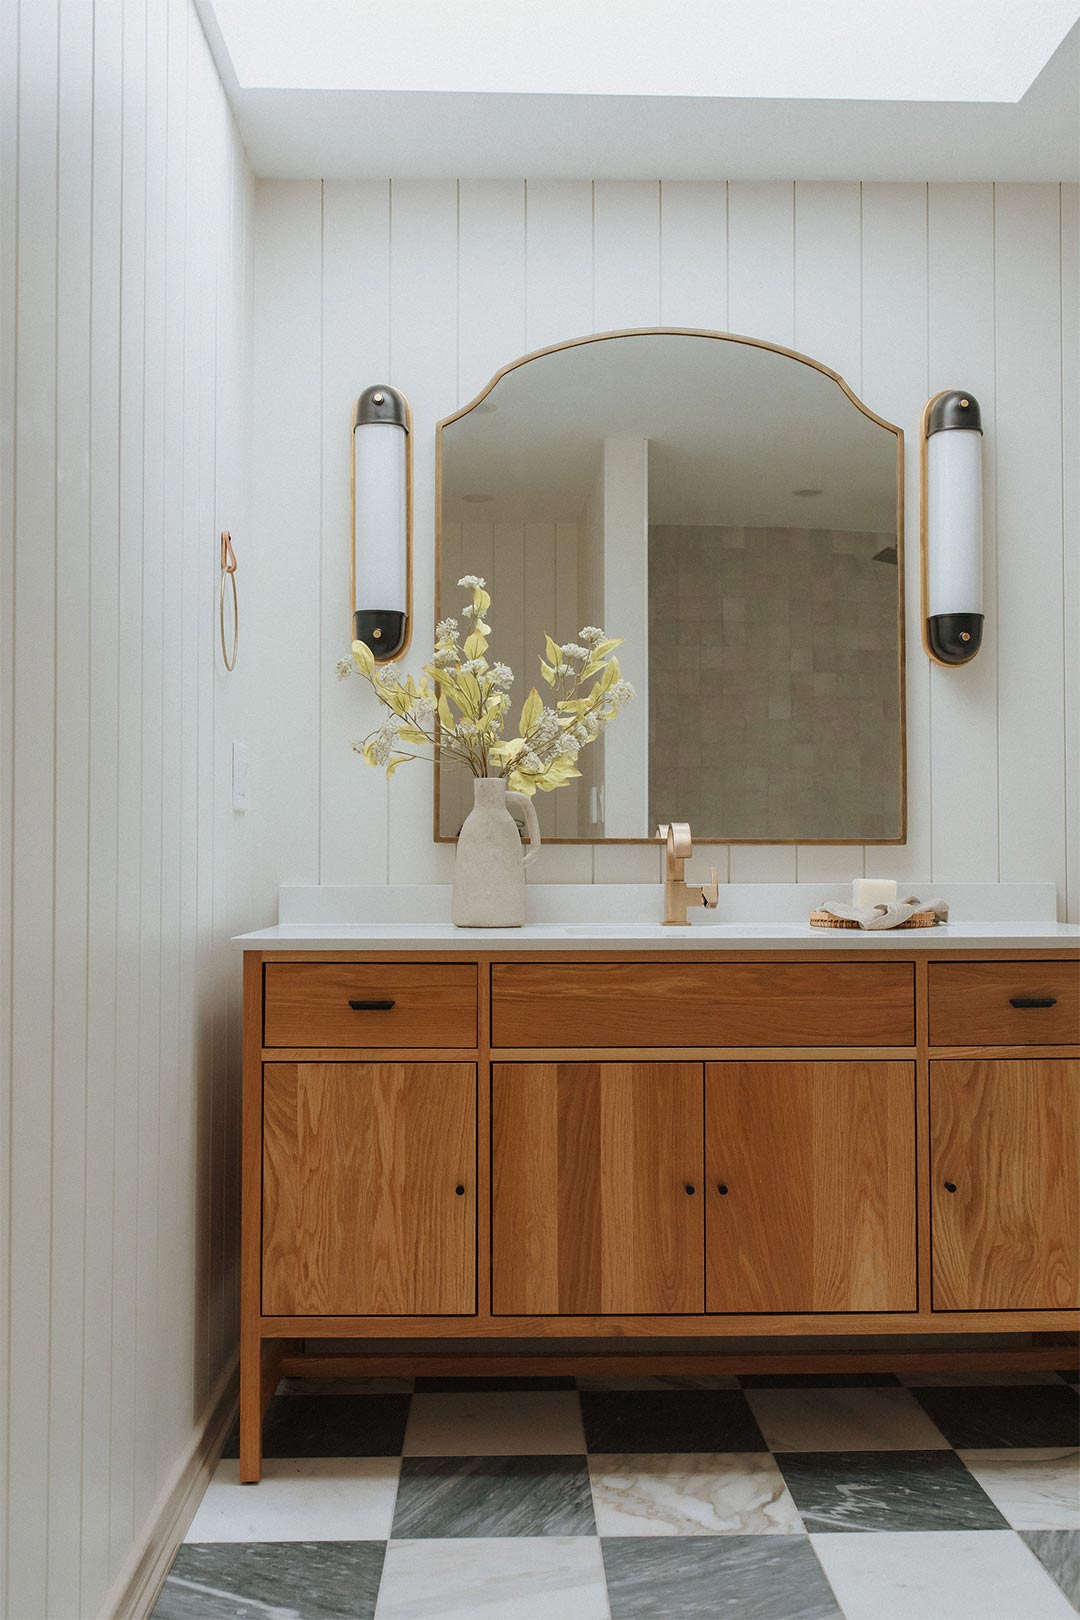 Modern Farmhouse bathroom with Vertical Shiplap Paneling an oak vanity and Marble Checkerboard Floor Tile - Bardiglio Marble and Bianco Carrara Marble 12x12 custom flooring